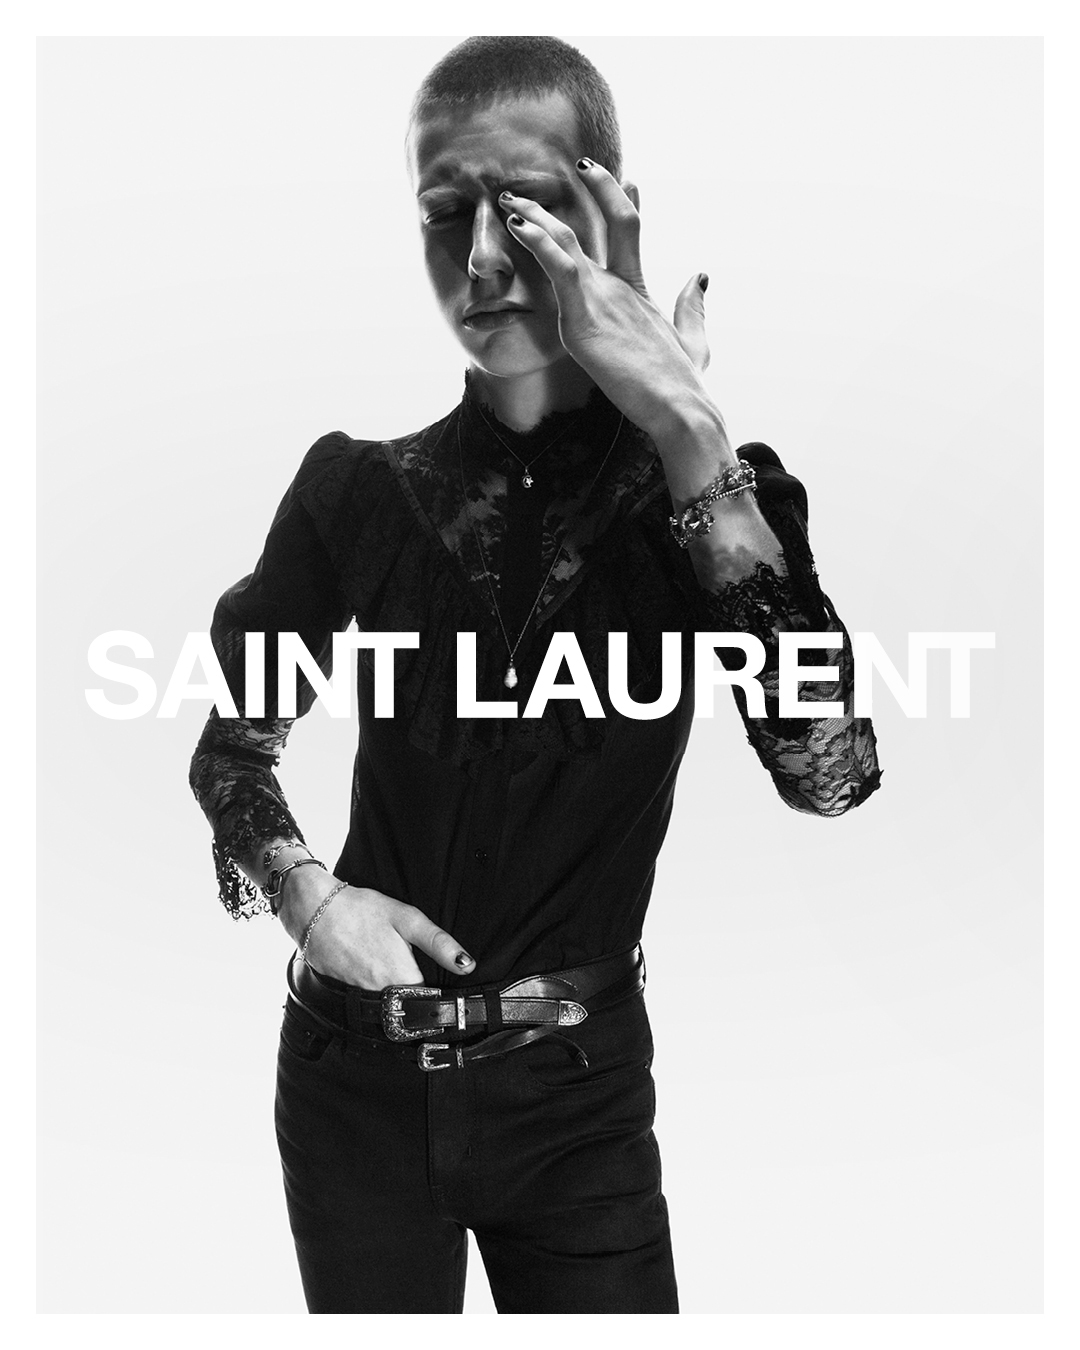 Saint Laurent Spring 2022 Ad Campaign | The Impression